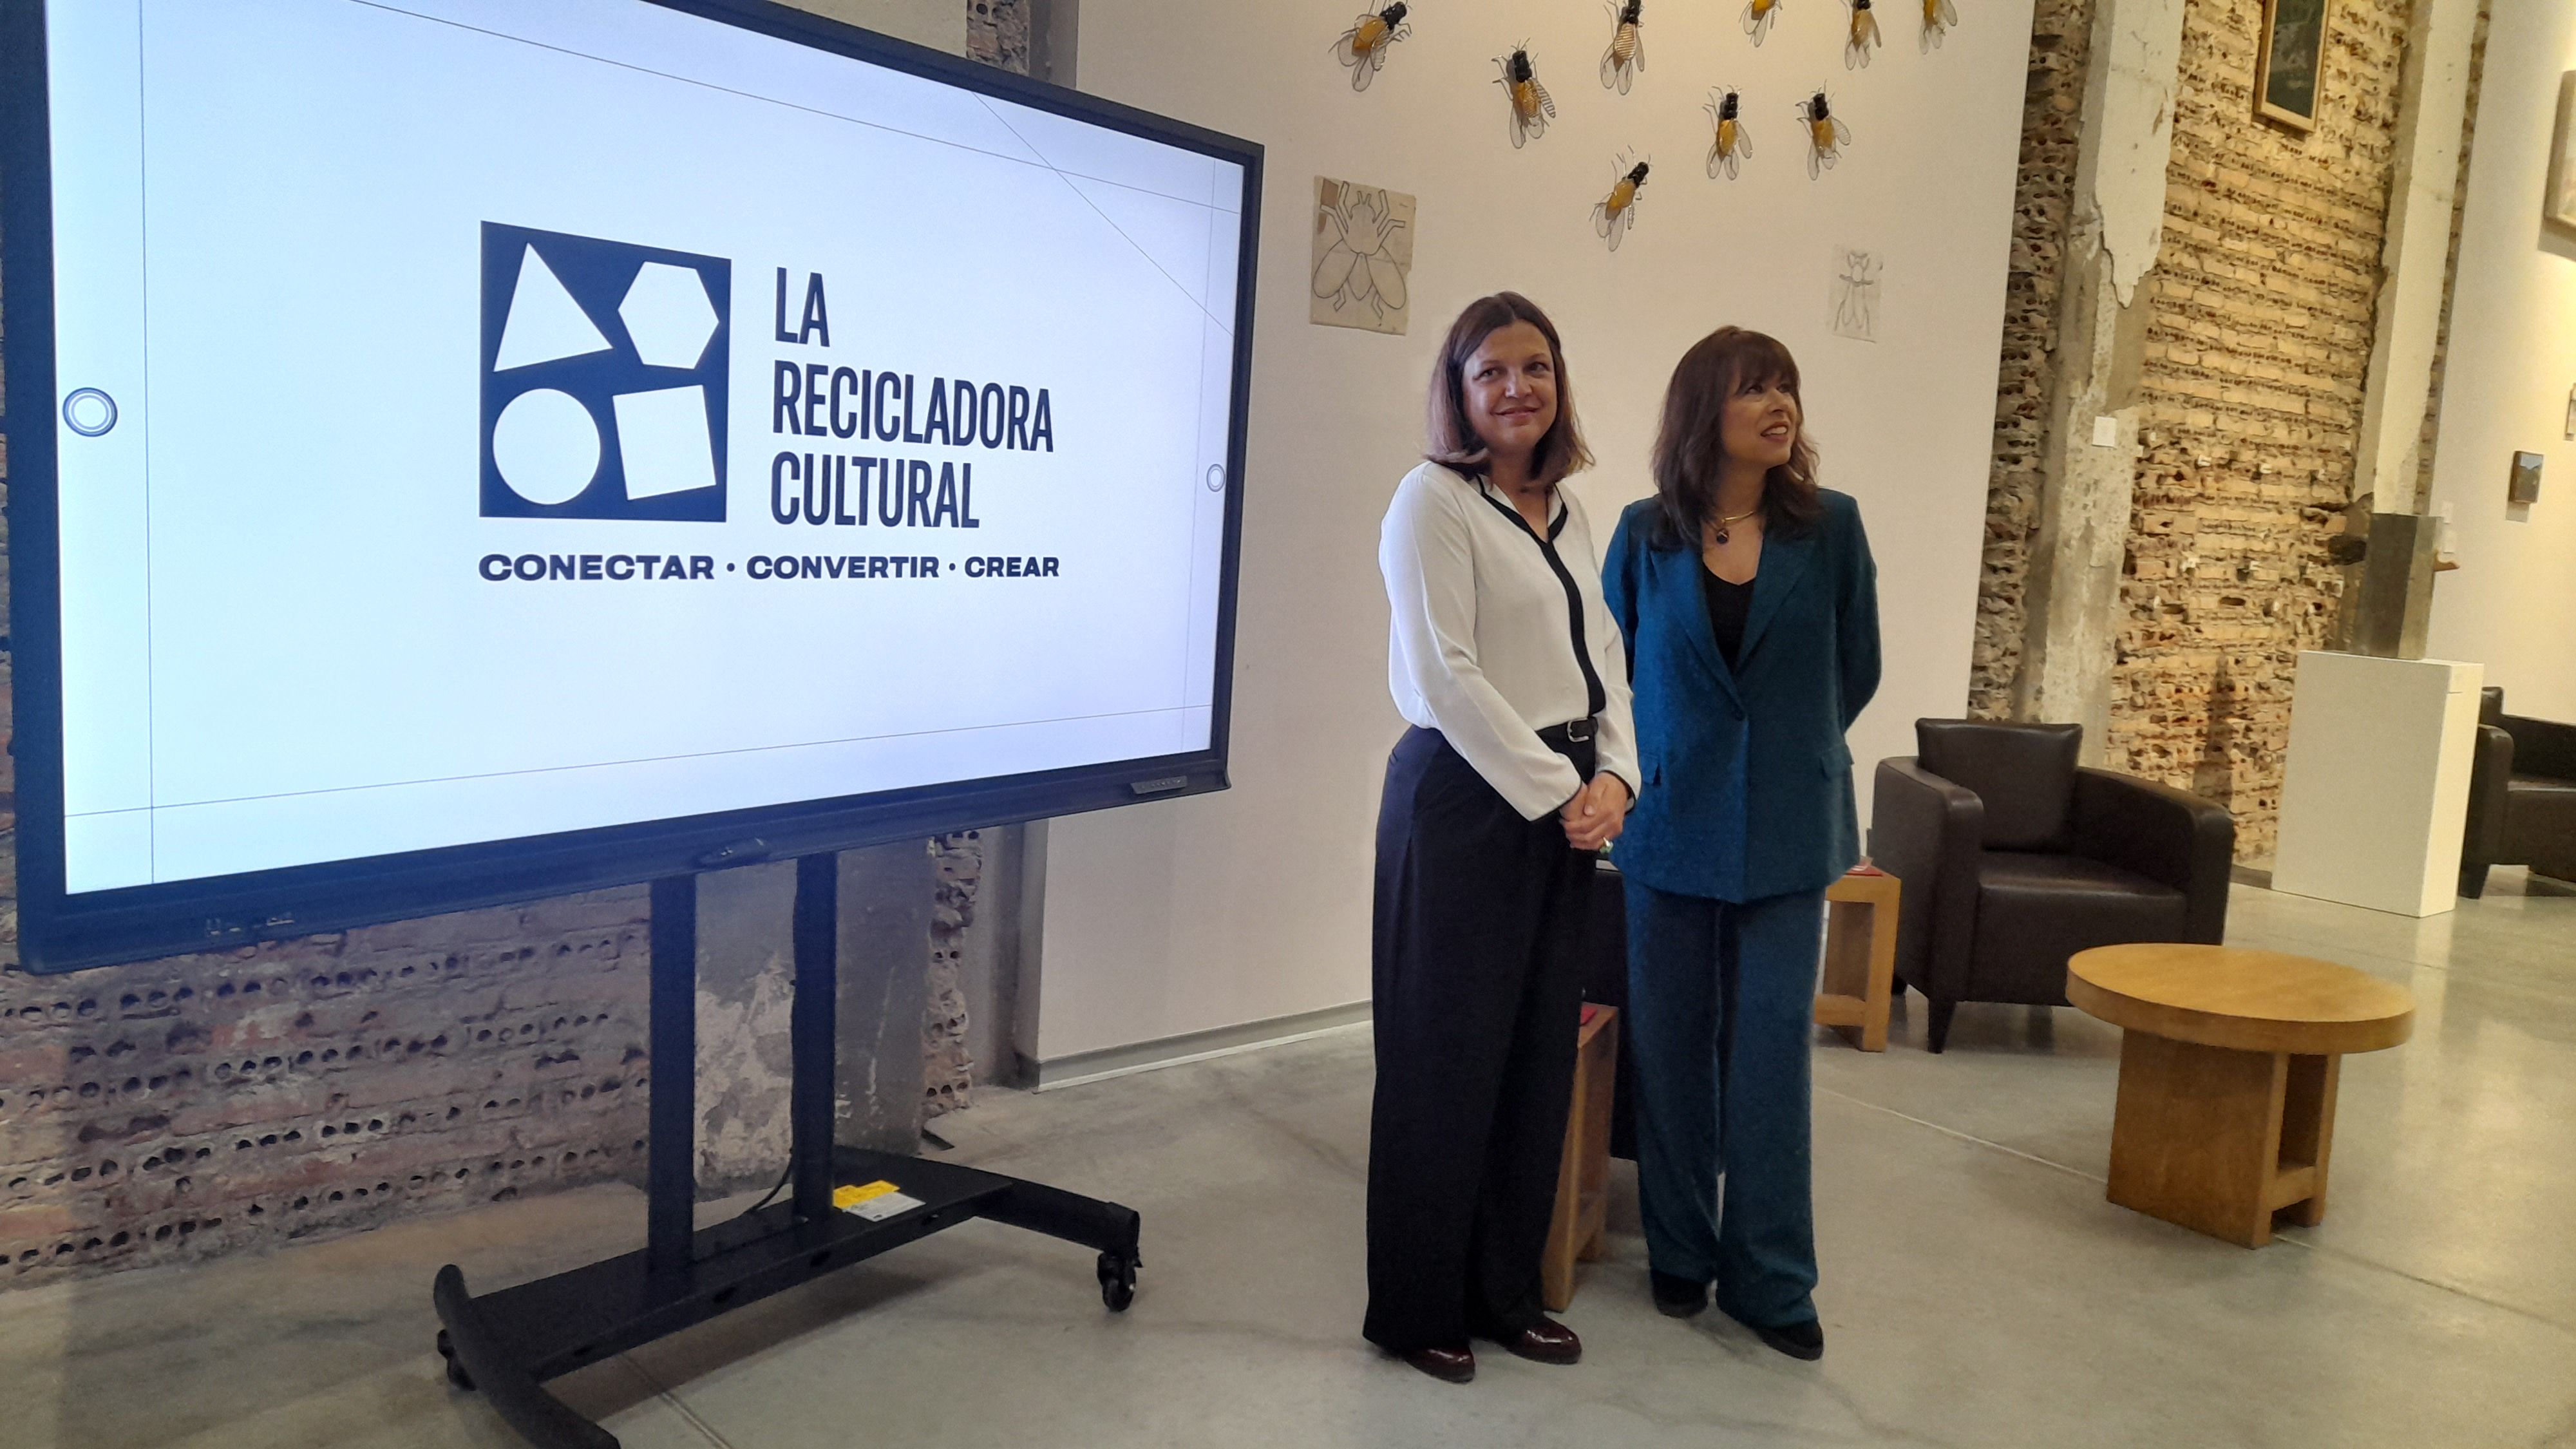 Presentación del proyecto de La Recicladora Cultural en La Térmica Cultural. | MAR IGLESIAS